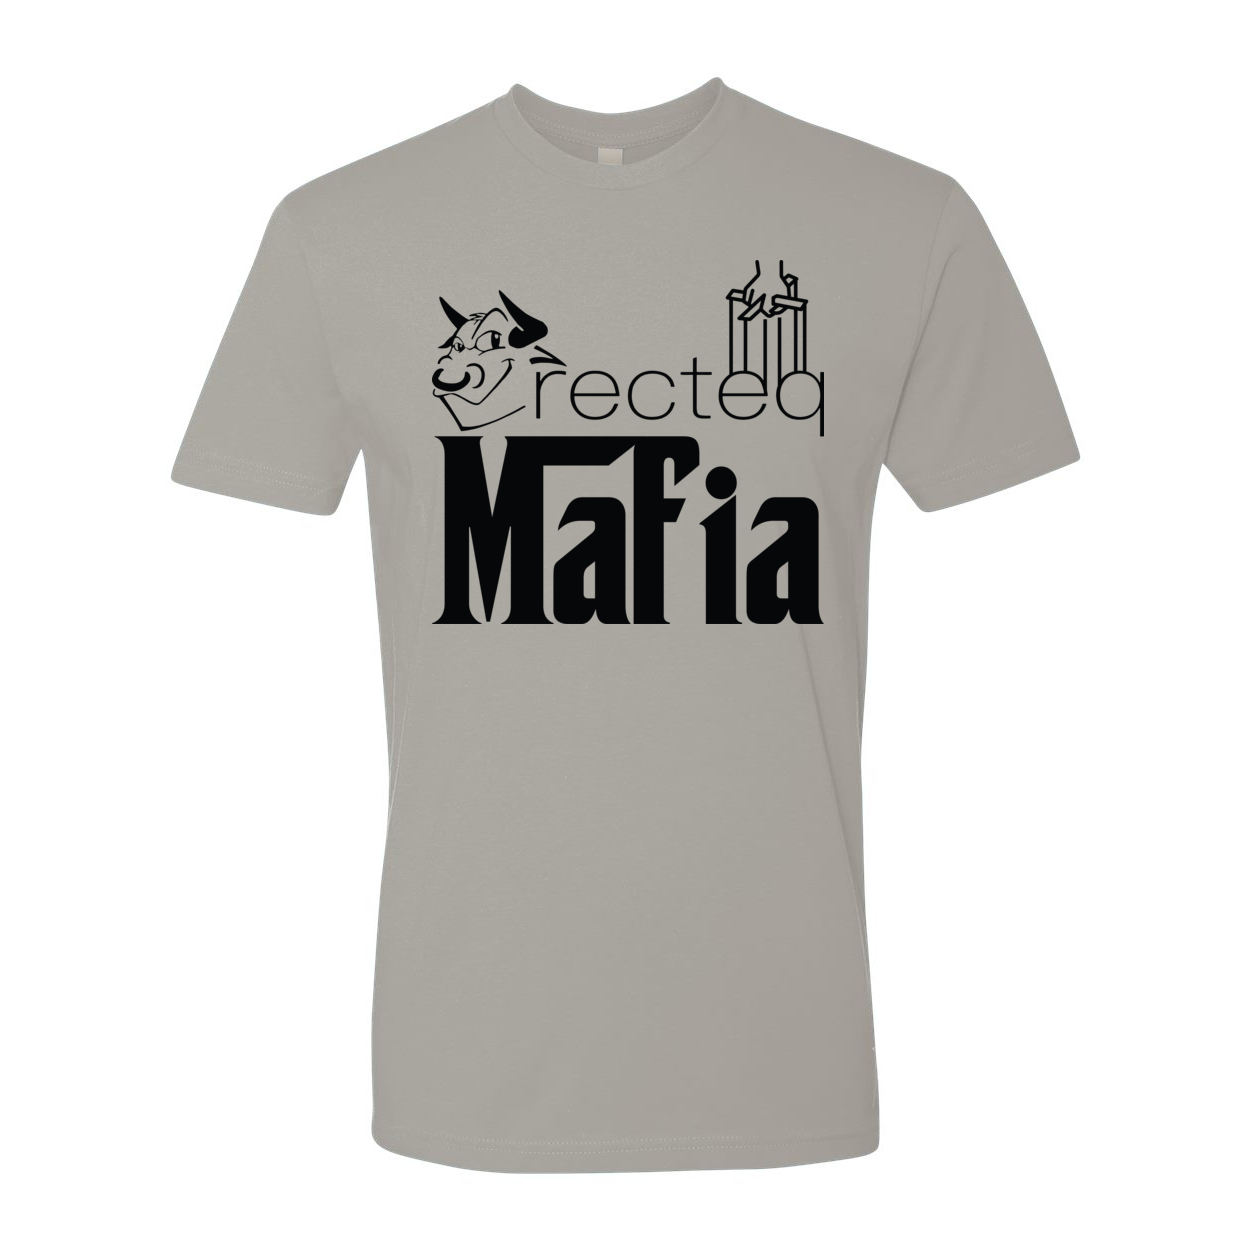 free mafia shirt //GRATIS//  Mafia shirts, Tuxedo t shirt, All blacks t  shirt